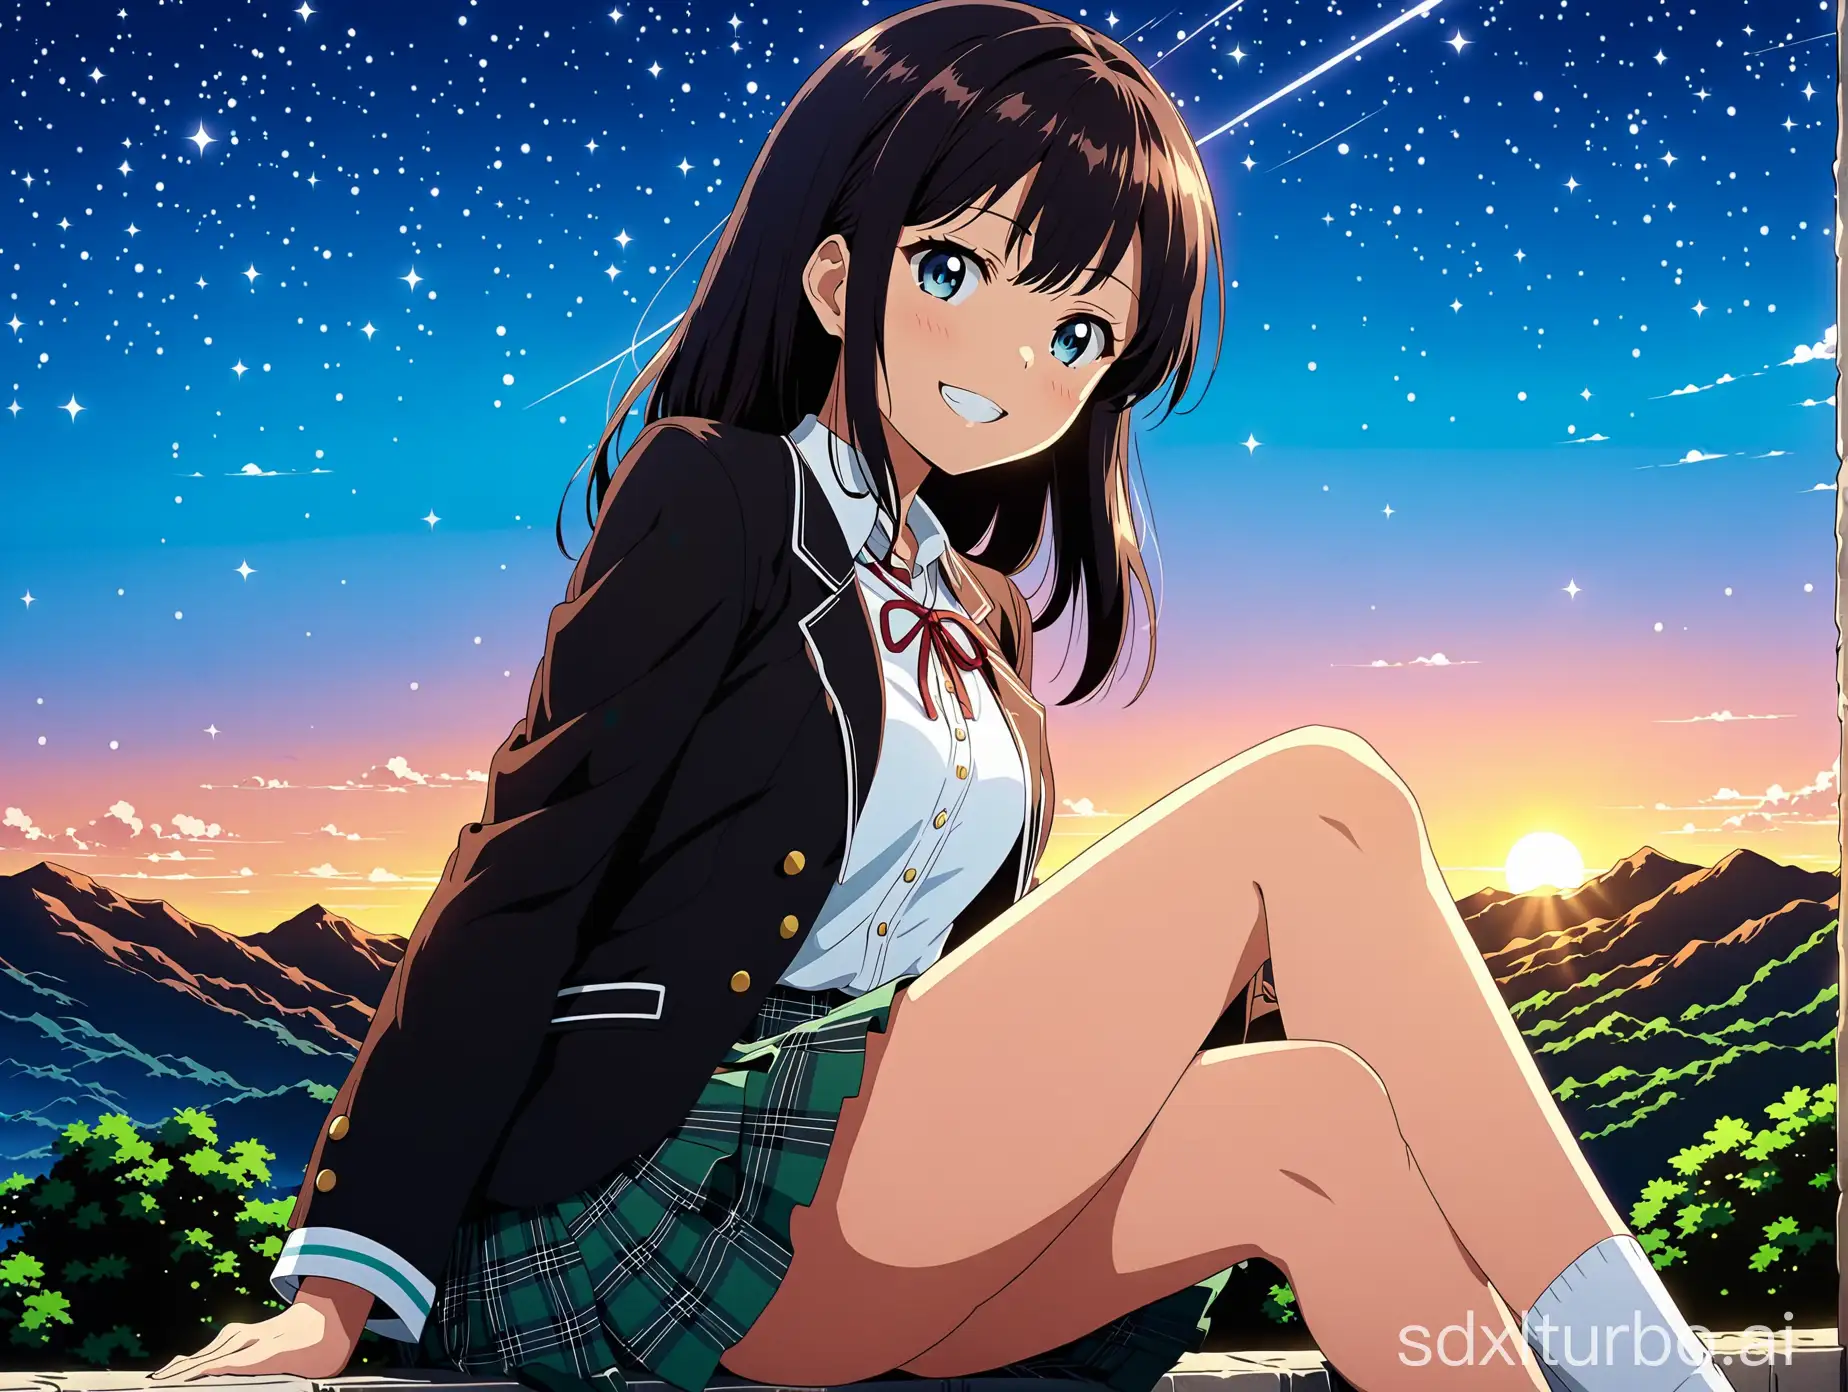 Marin-Kitagawa-Sitting-Under-Starry-Night-Sky-in-School-Uniform